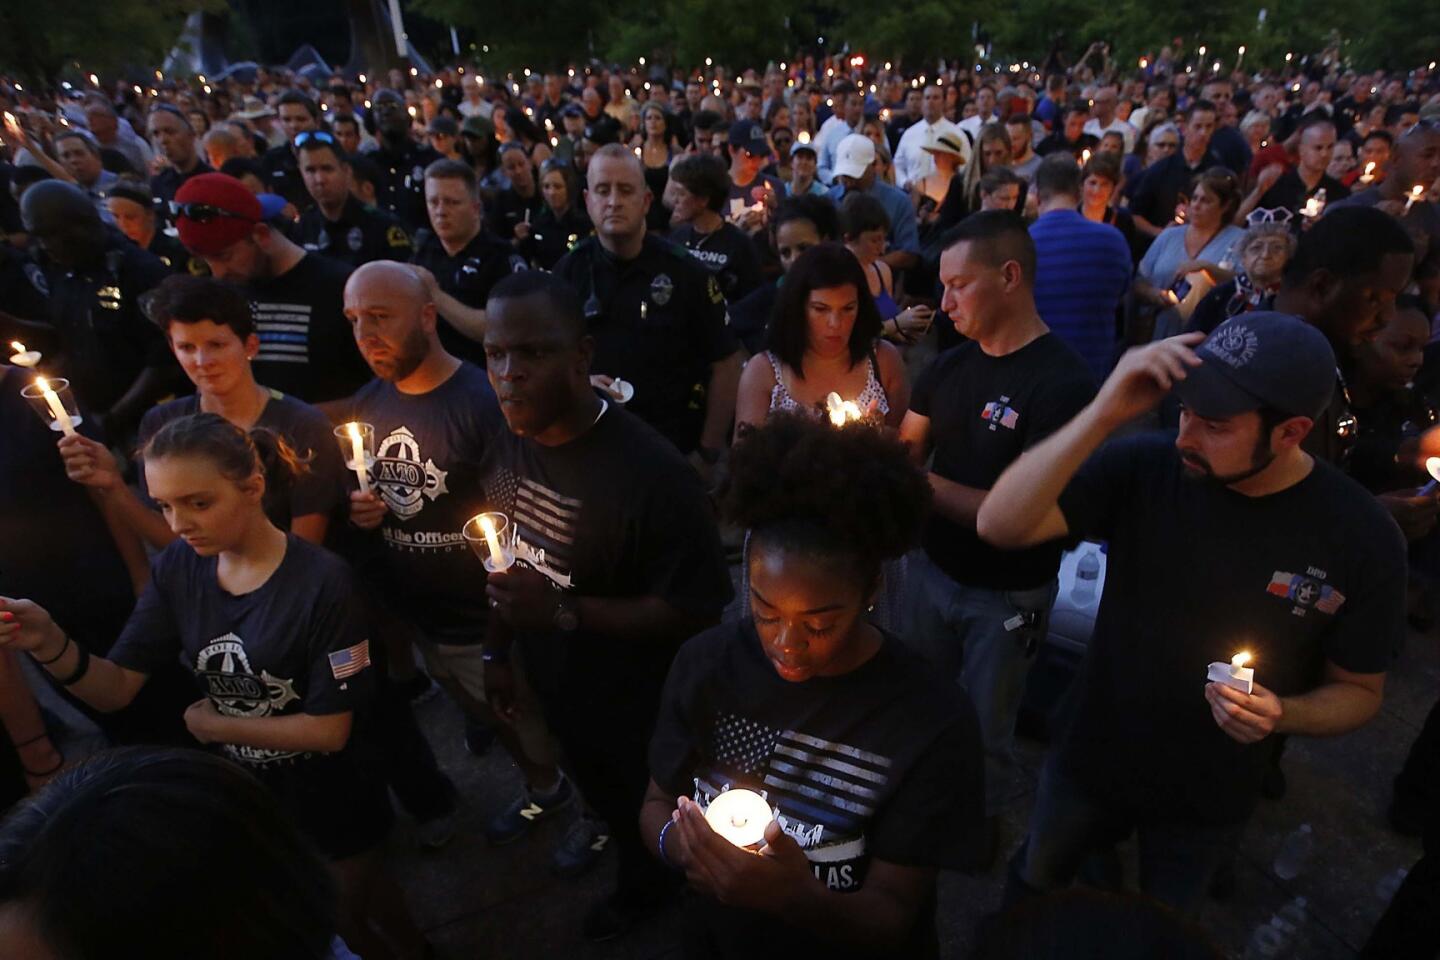 Dallas Strong candlelight vigil